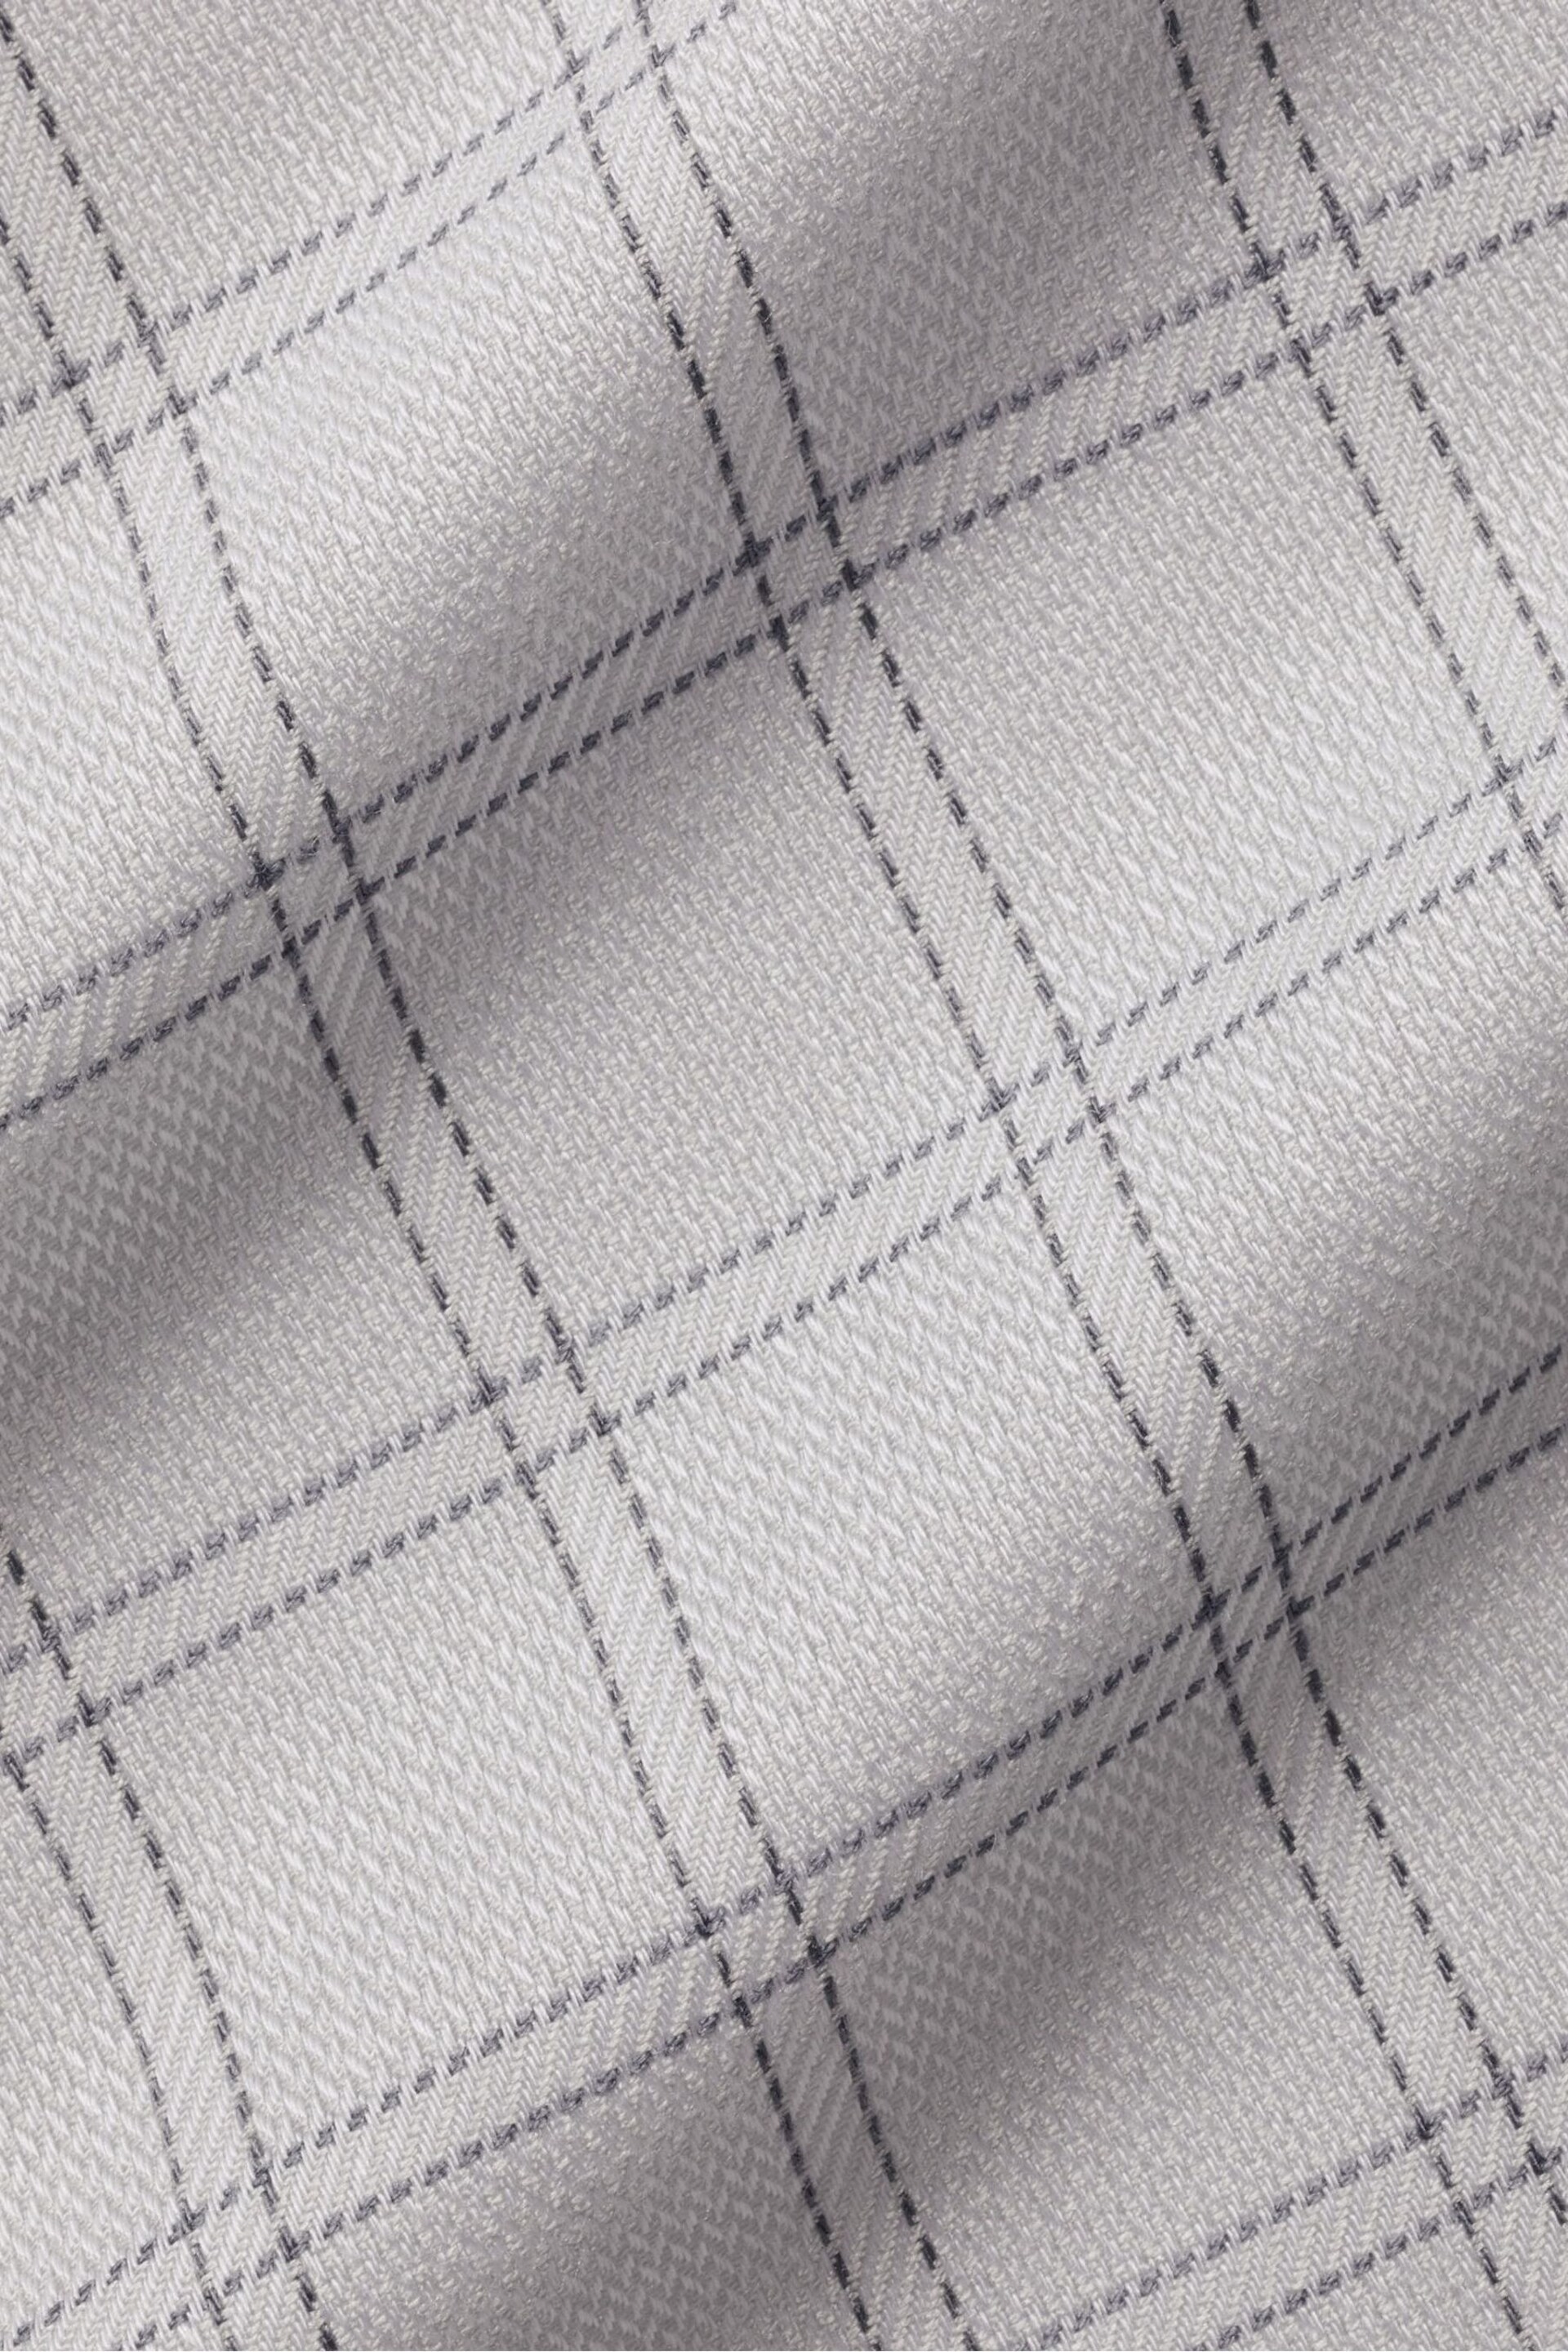 Charles Tyrwhitt Grey Non-iron Mayfair Weave Cutaway Slim Fit Shirt - Image 6 of 6